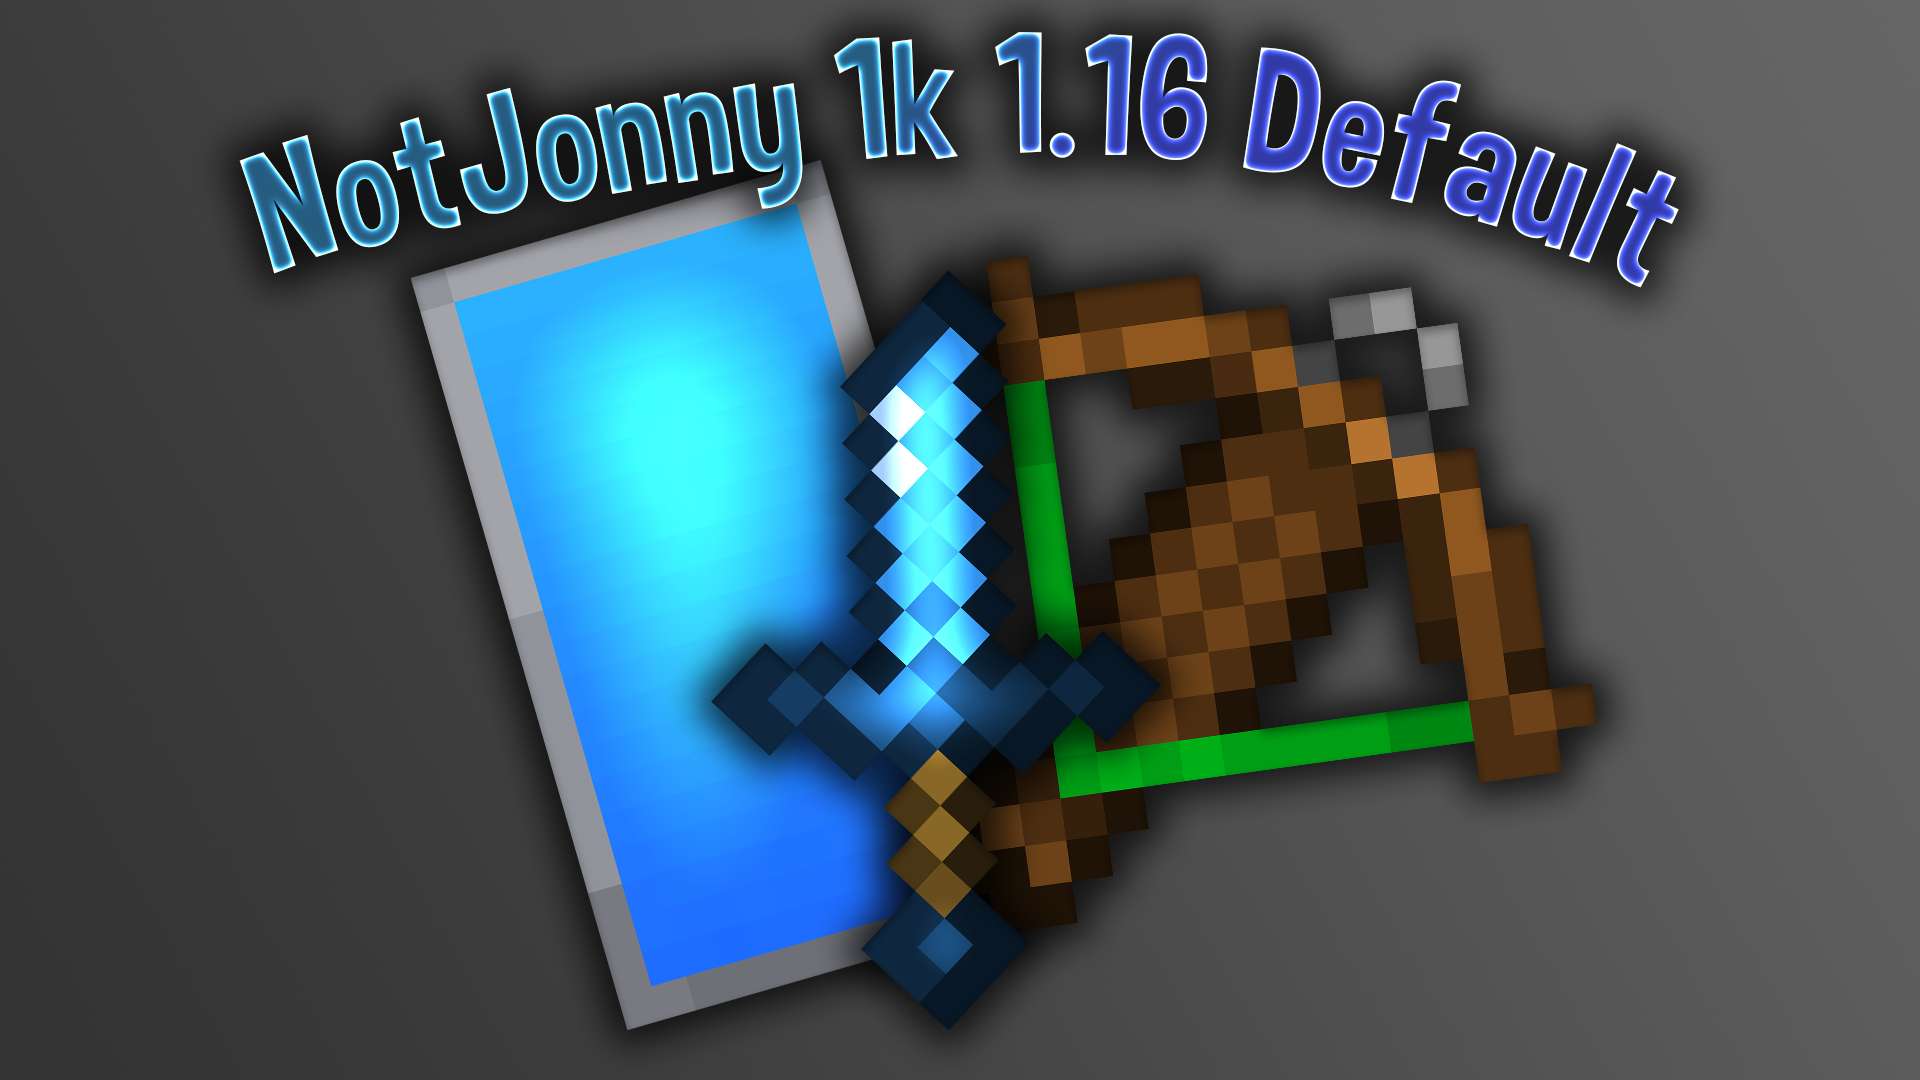 NotJonny 1k Default 1.16 Edit 16x by NotJonnyTV & NotJonny on PvPRP